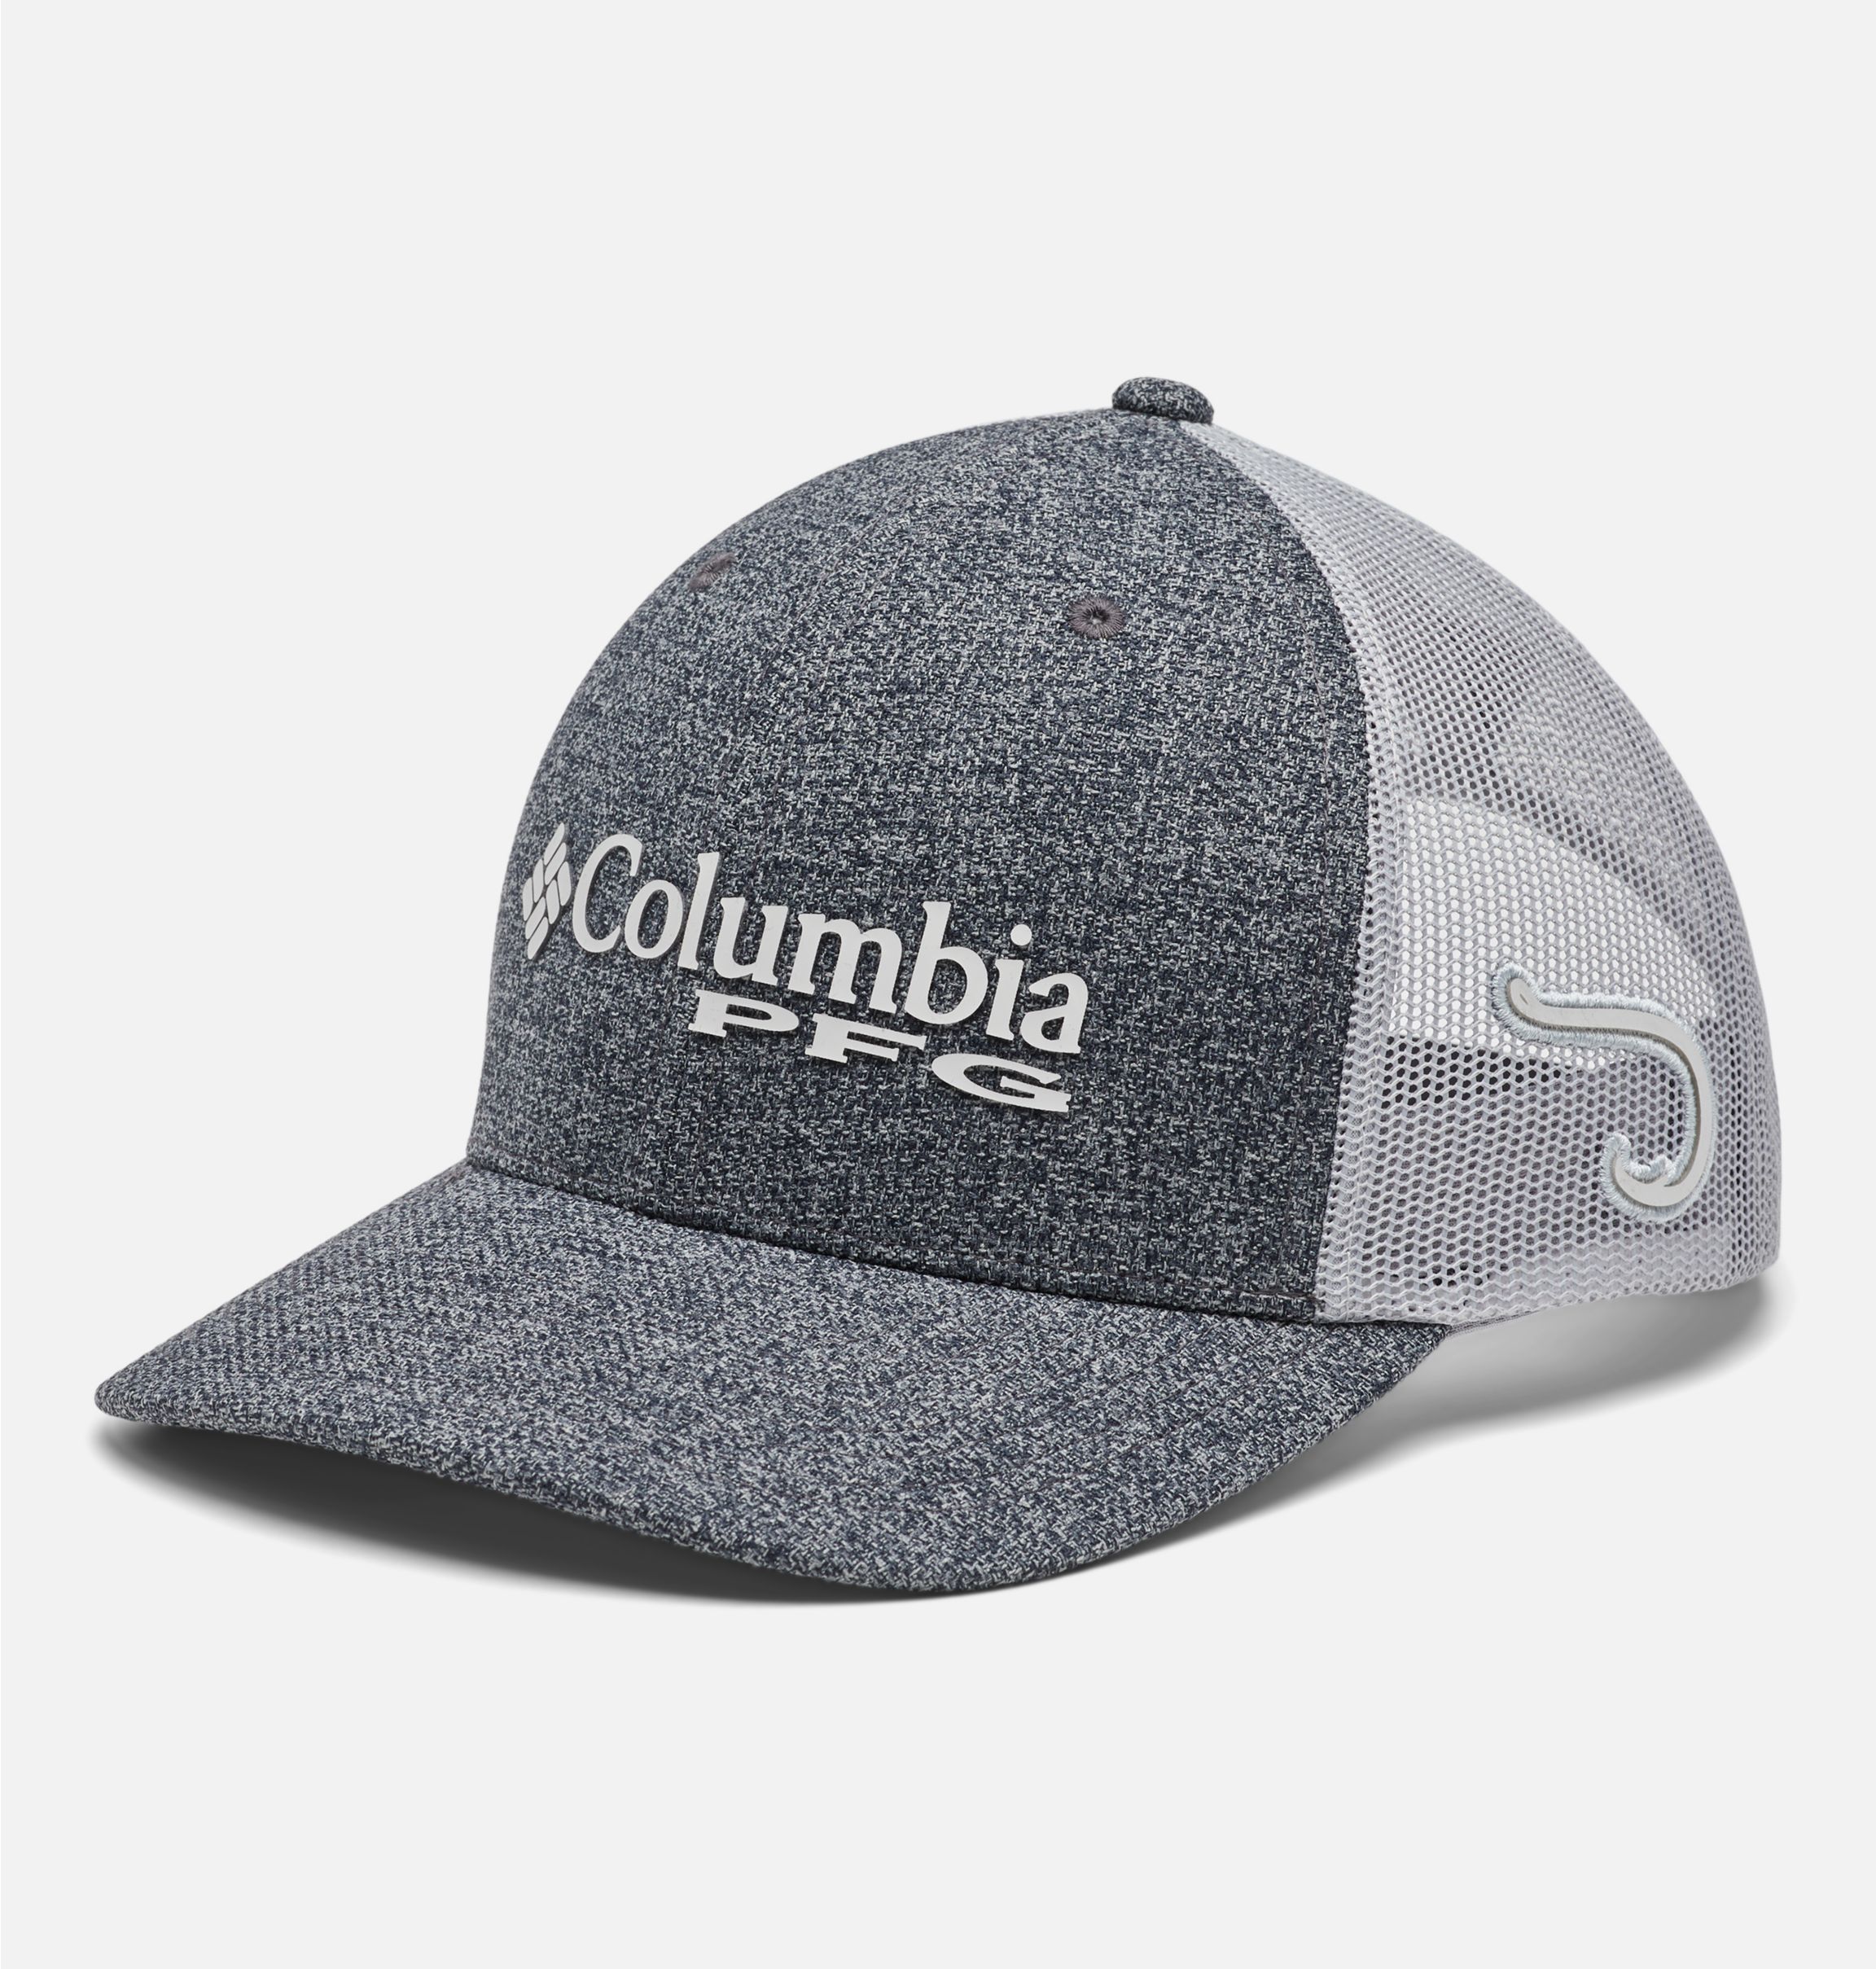 Columbia Hats For Men